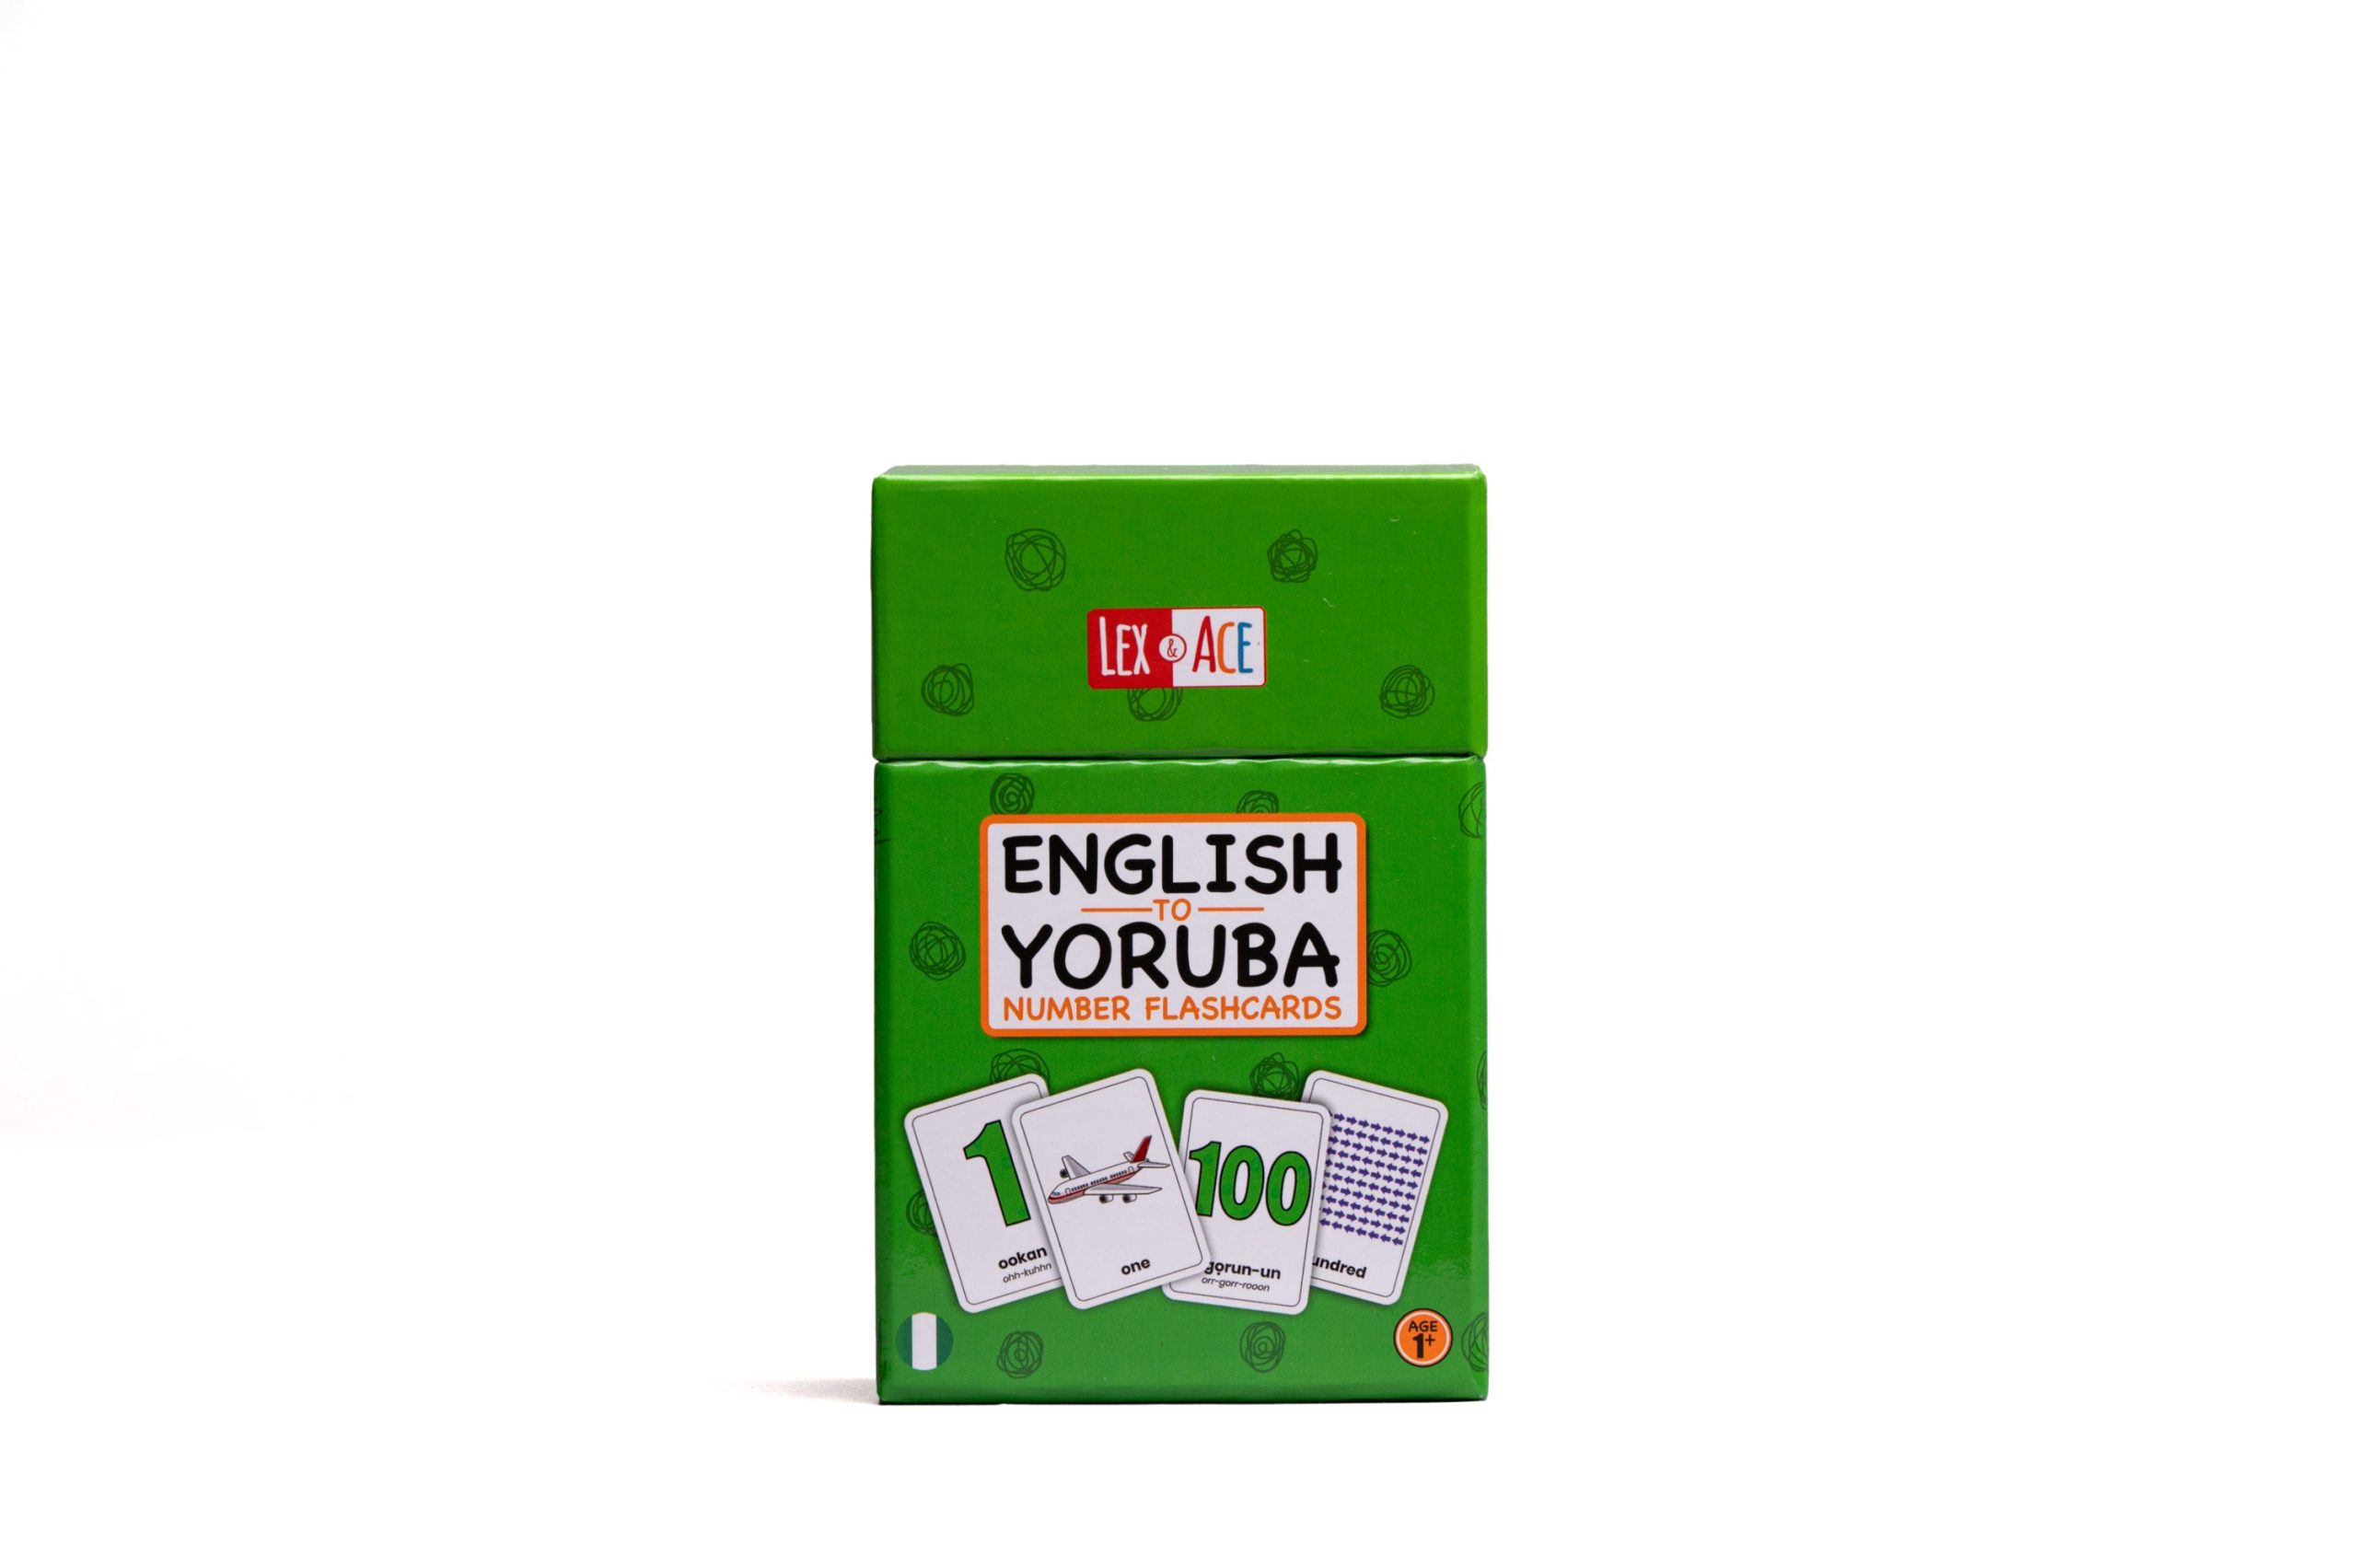 English to Yoruba Number Flashcards